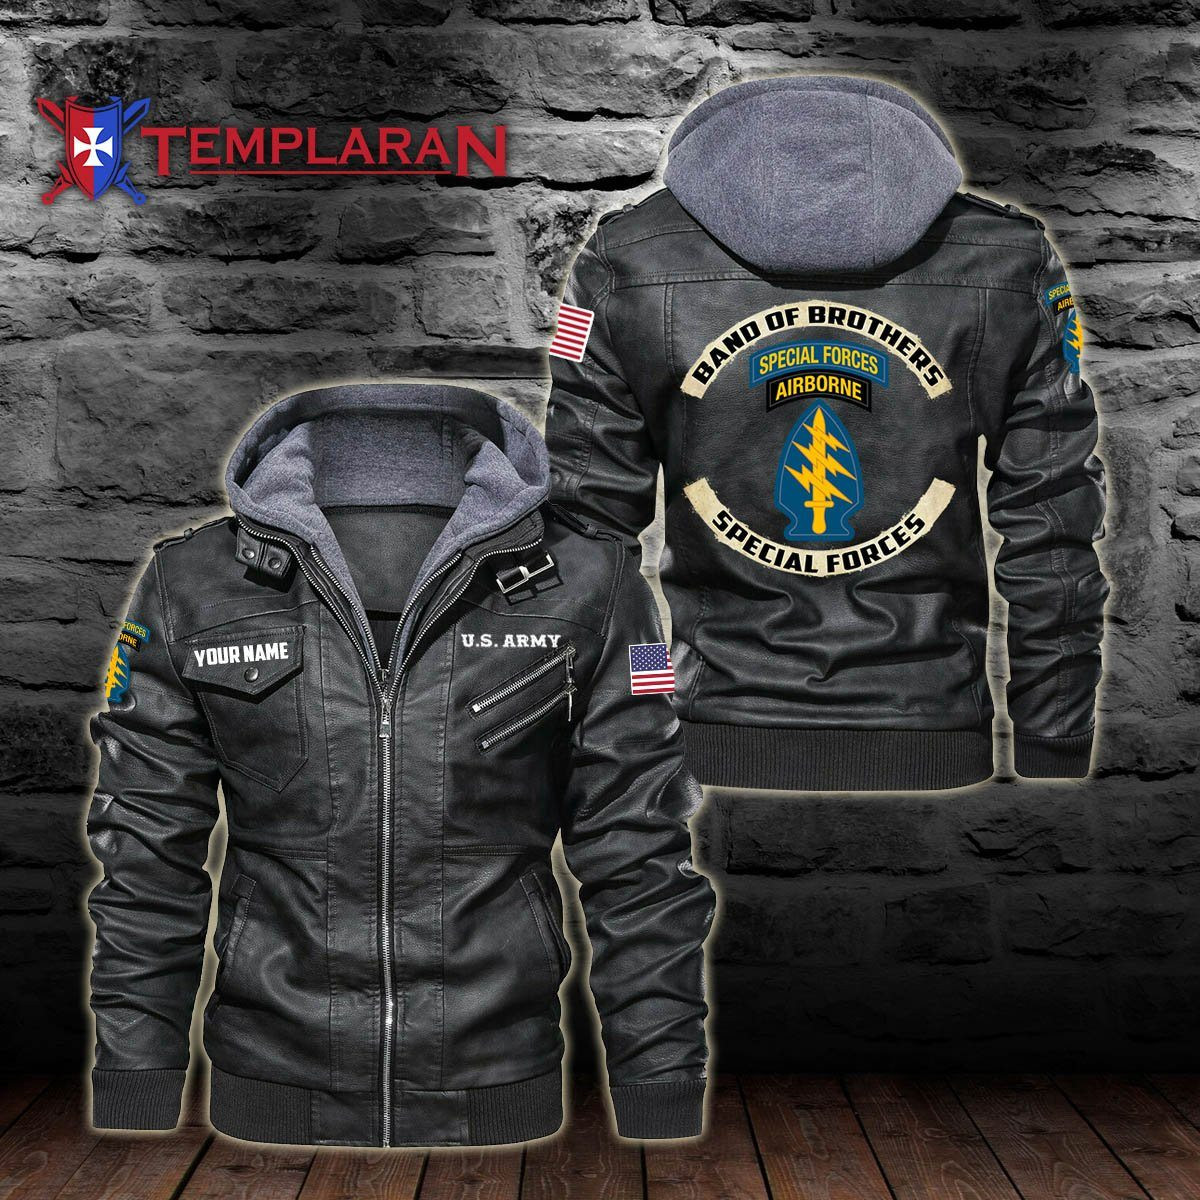 Top leather jacket Sells Best on Techcomshop 181